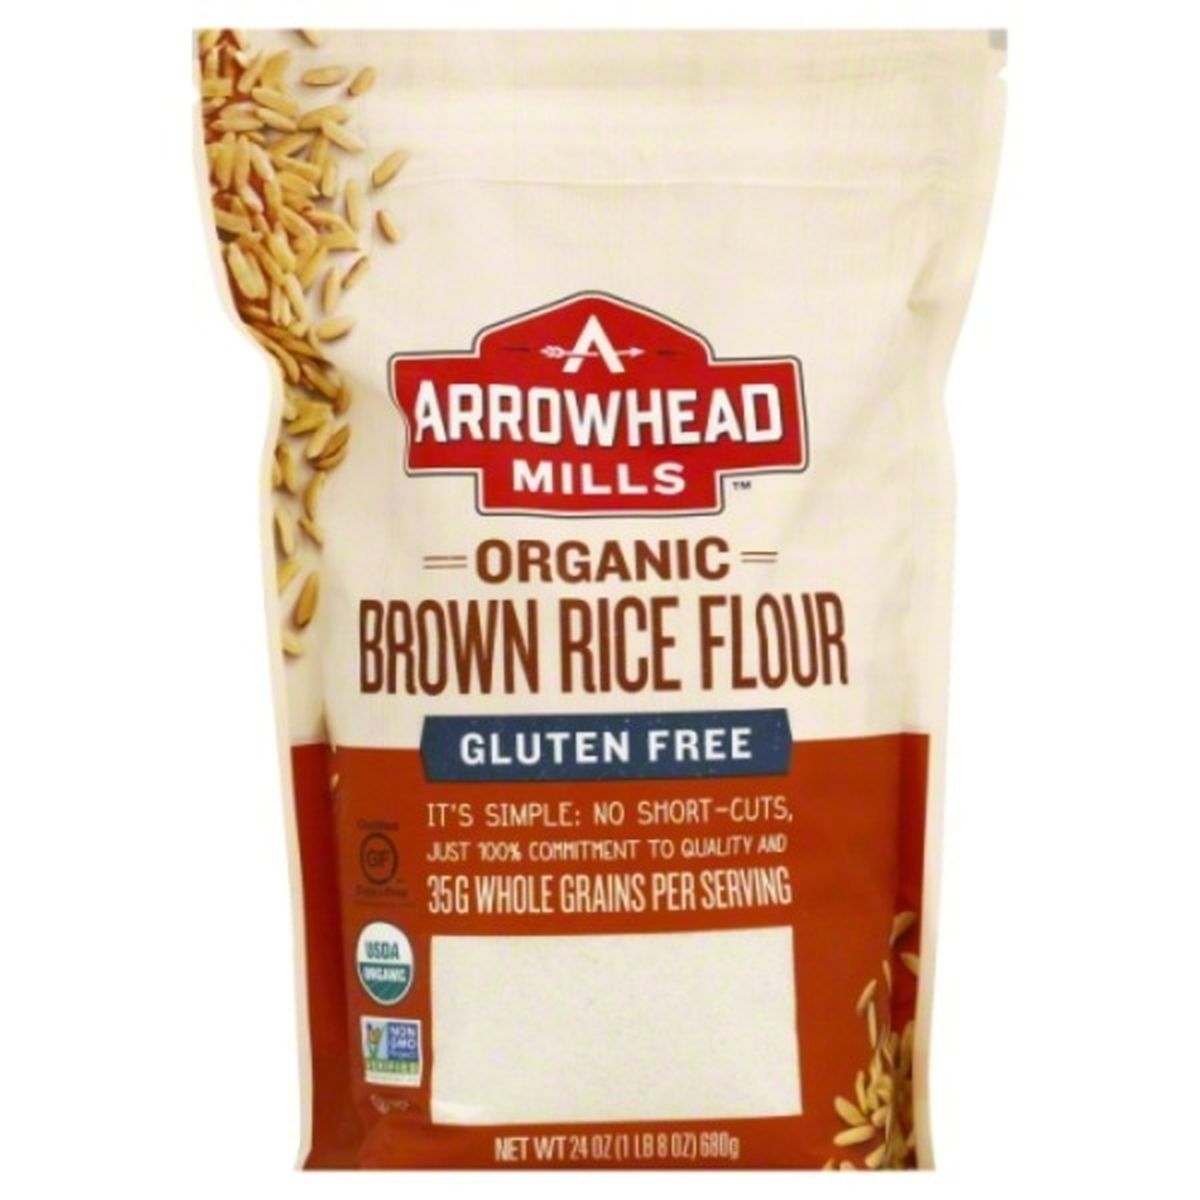 Calories in Arrowhead Mills Brown Rice Flour, Gluten Free, Organic